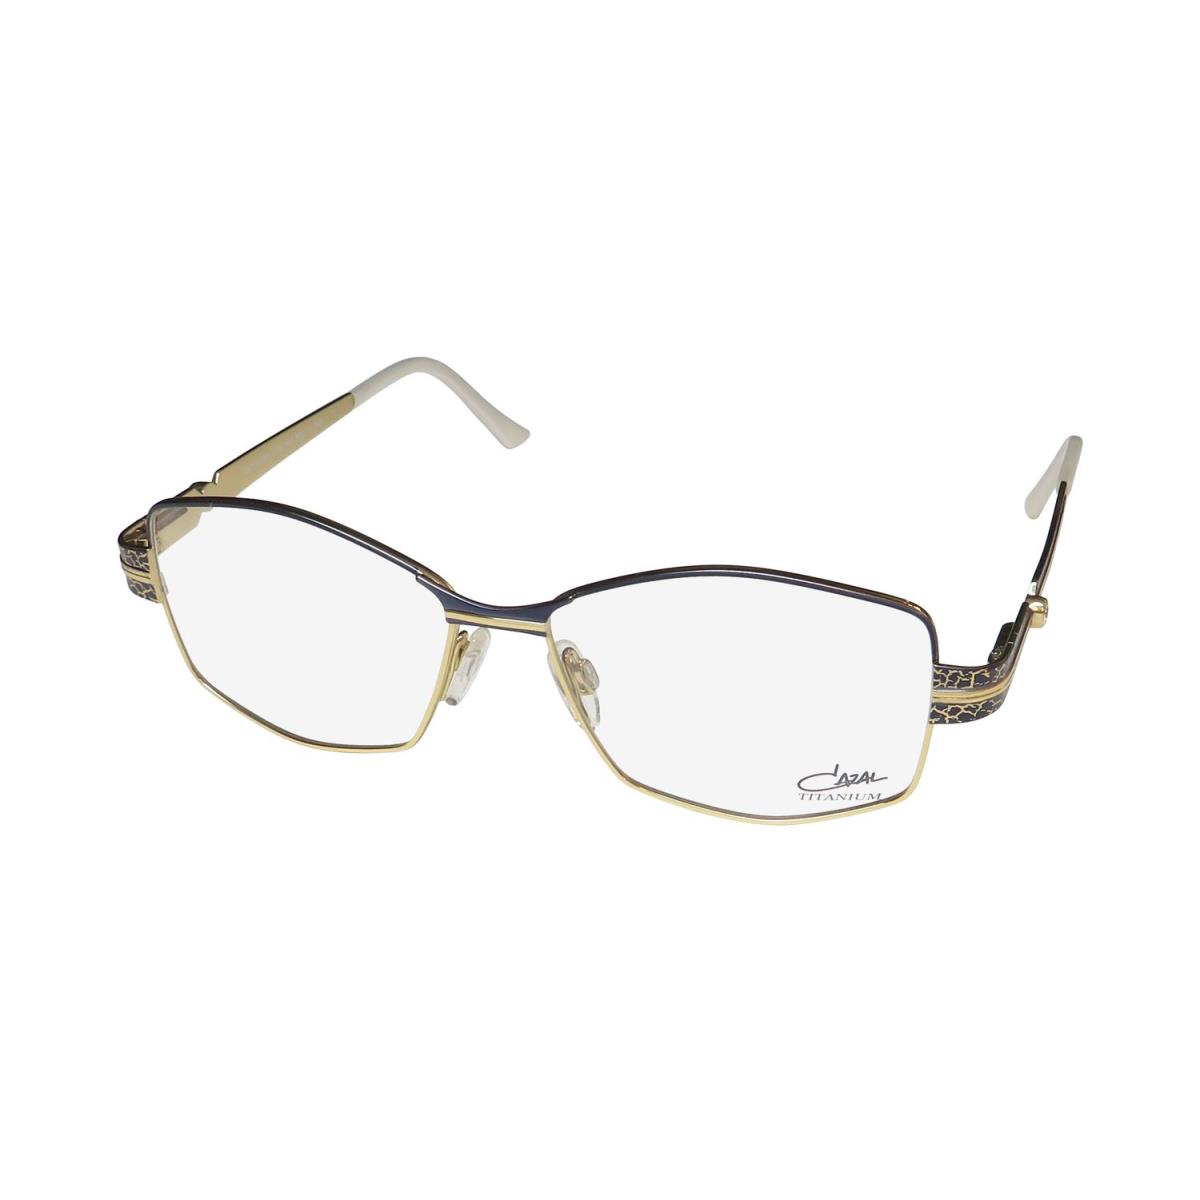 Cazal 1253 Titanium Retro/vintage Collection Rare Eyeglass Frame/glasses Blue / Gold